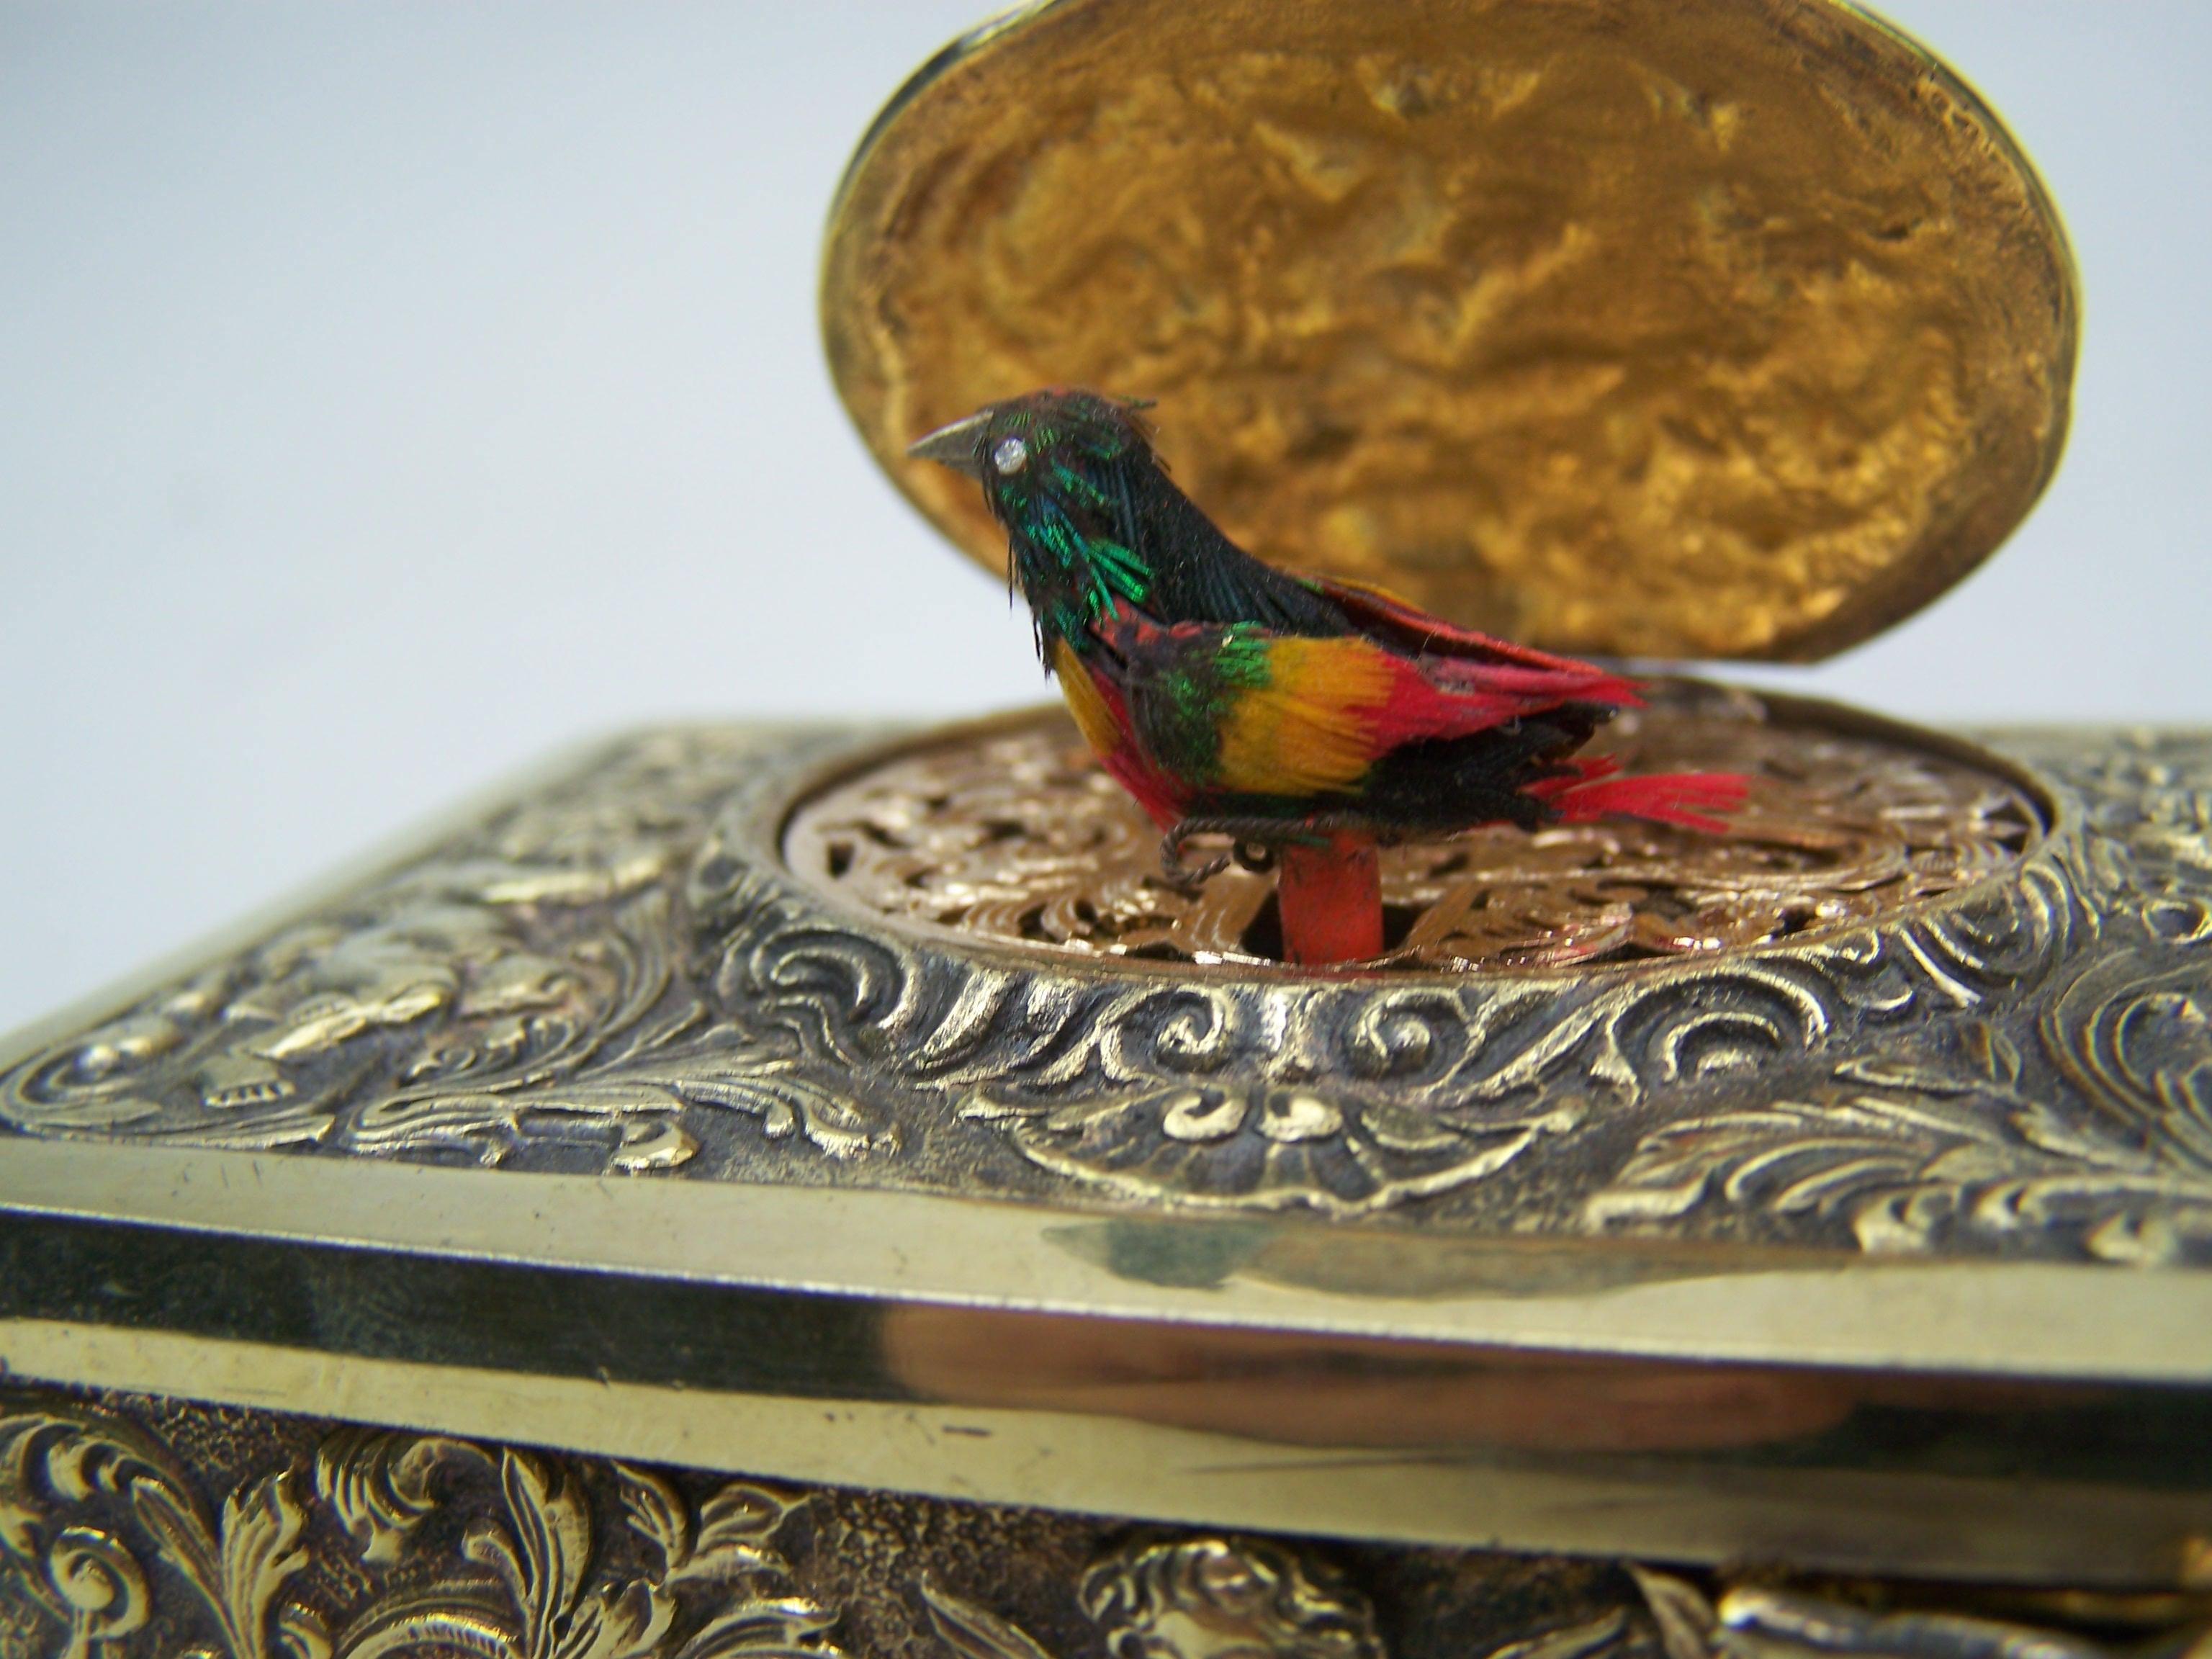 Singing bird box by K Griesbaum in guilded case 7